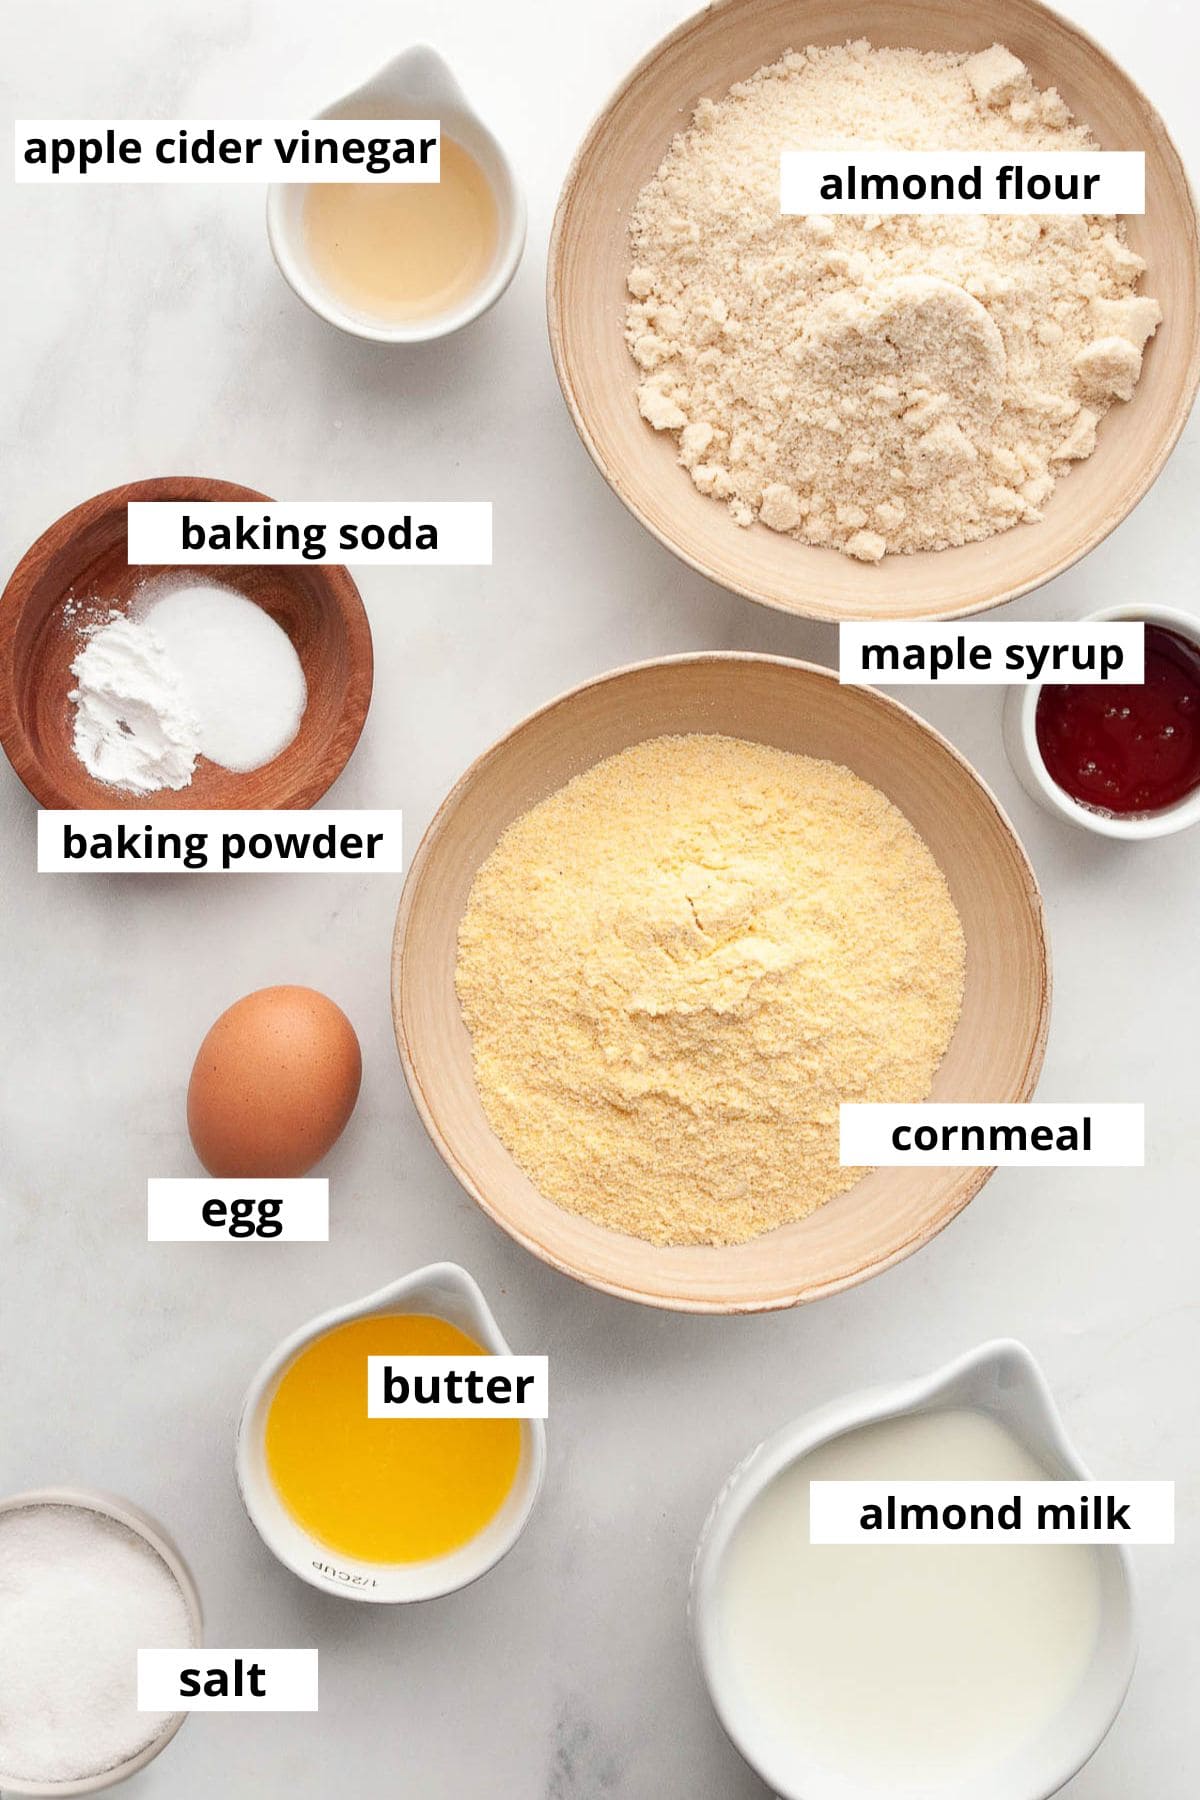 Almond flour, cornmeal, milk, egg, apple cider vinegar, maple syrup, melted butter, baking powder, baking soda, salt.